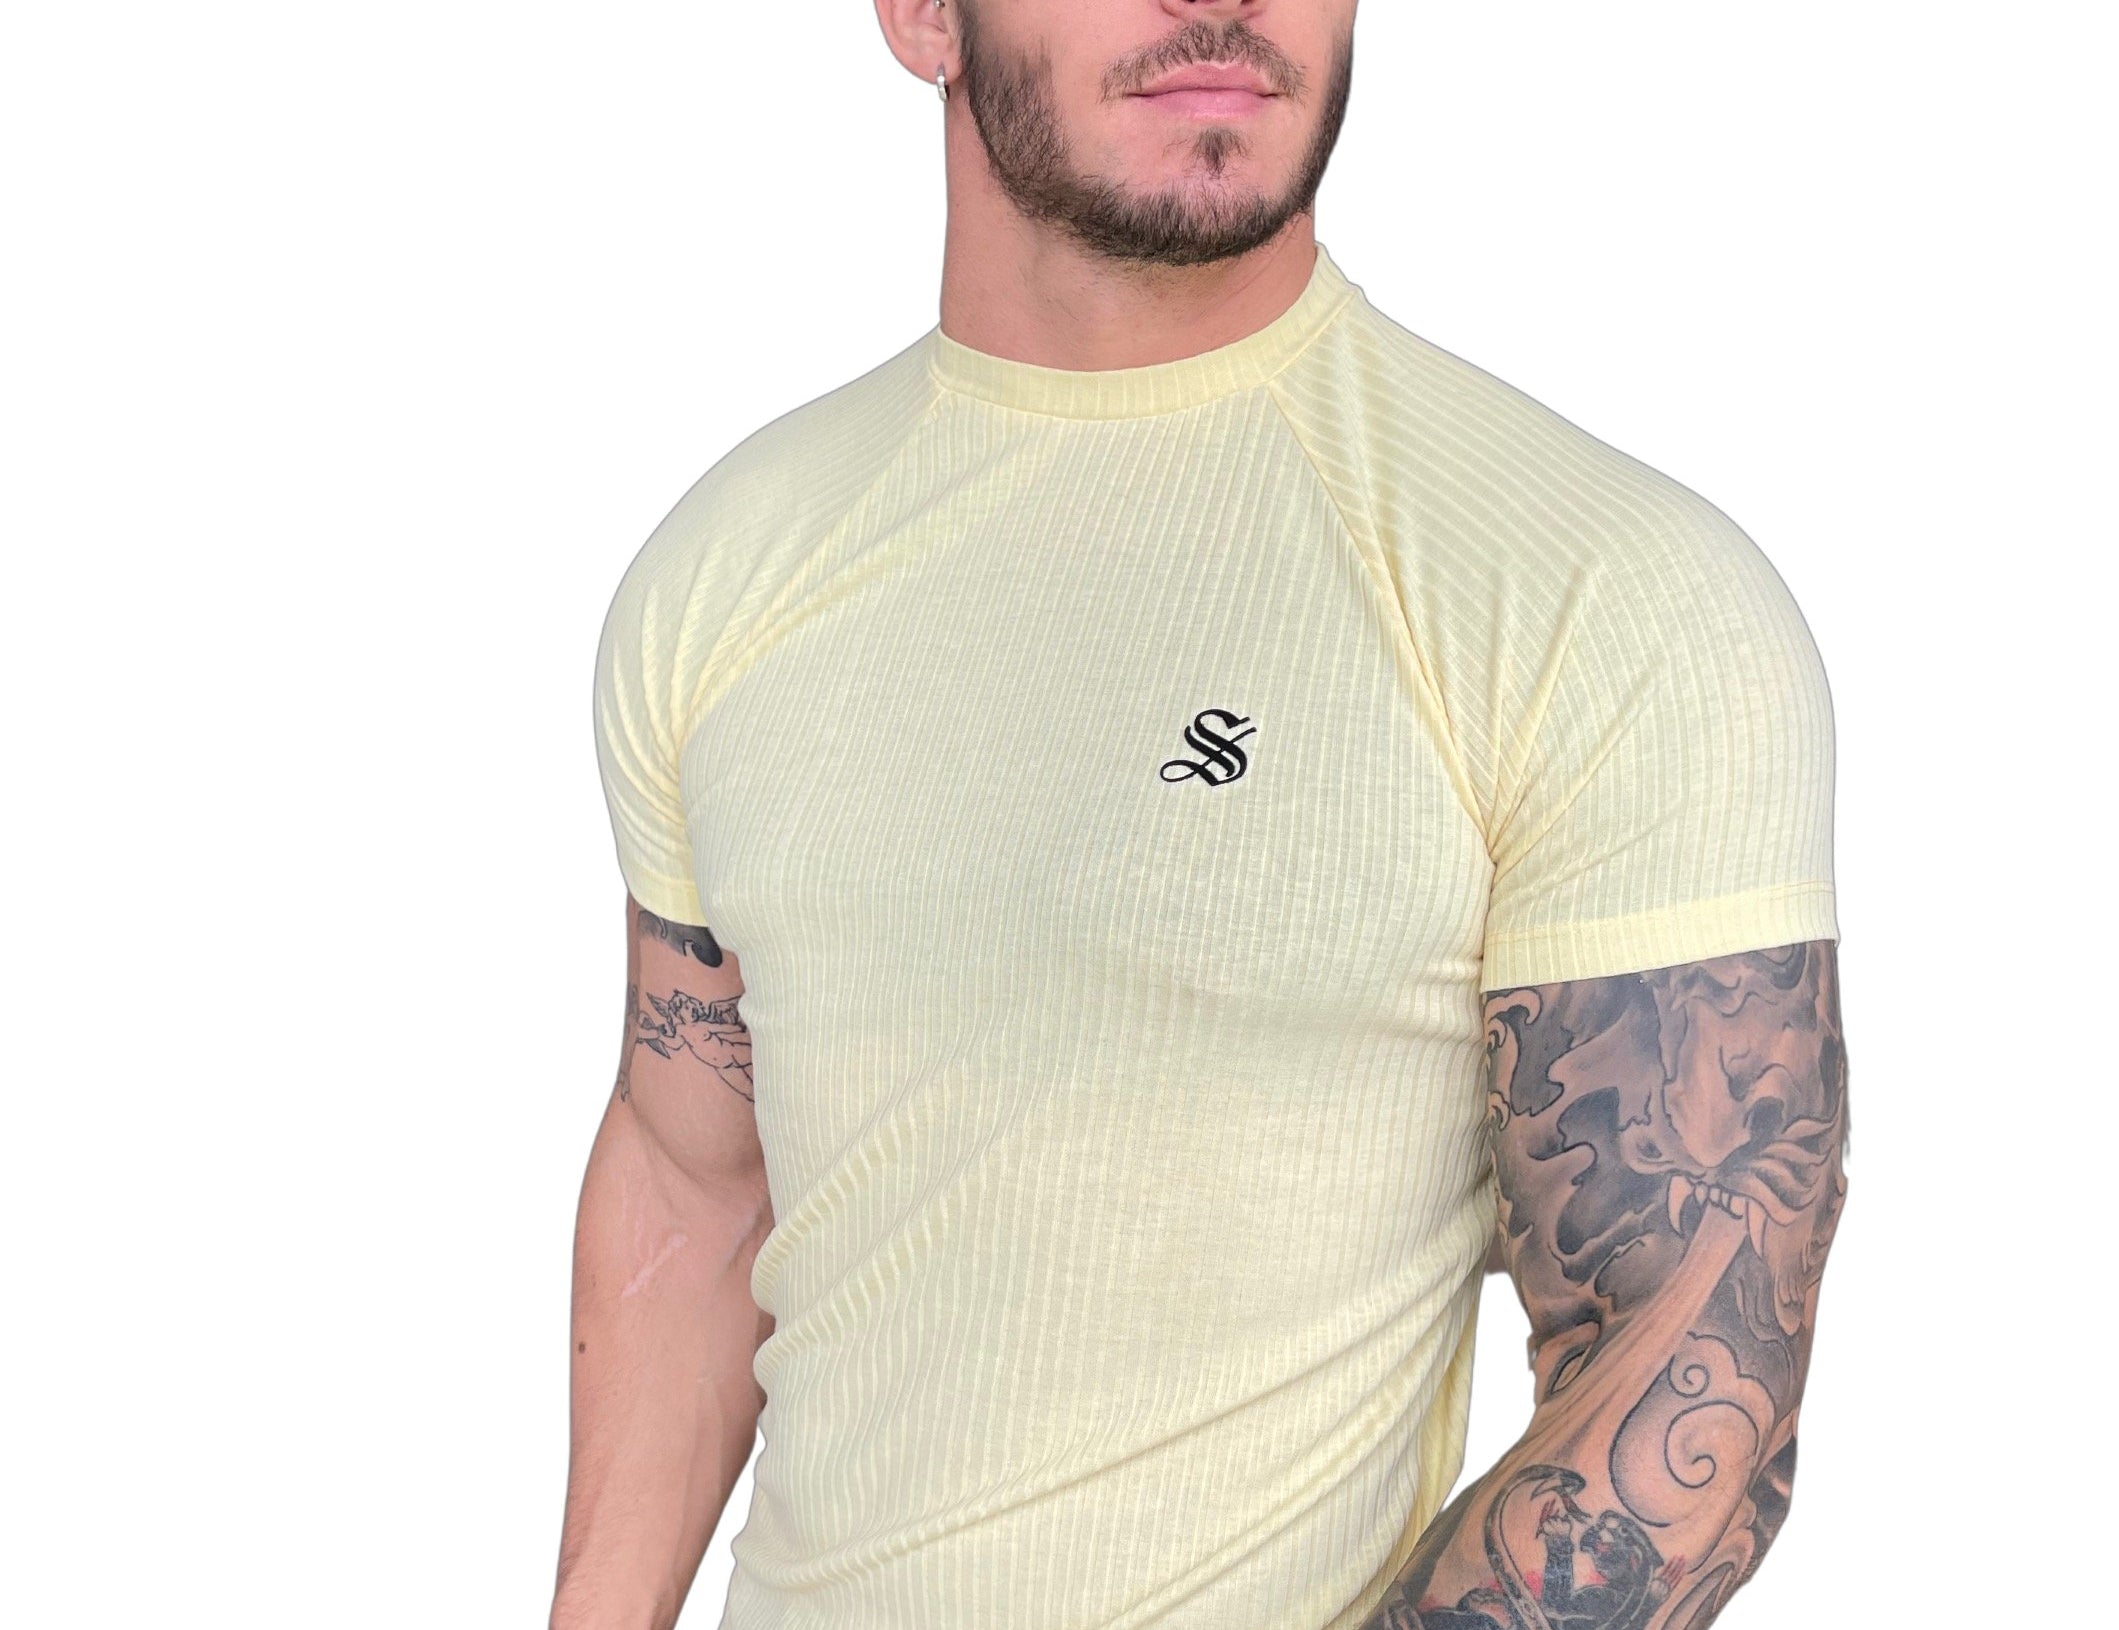 Cremol - Cream T-shirt for Men - Sarman Fashion - Wholesale Clothing Fashion Brand for Men from Canada